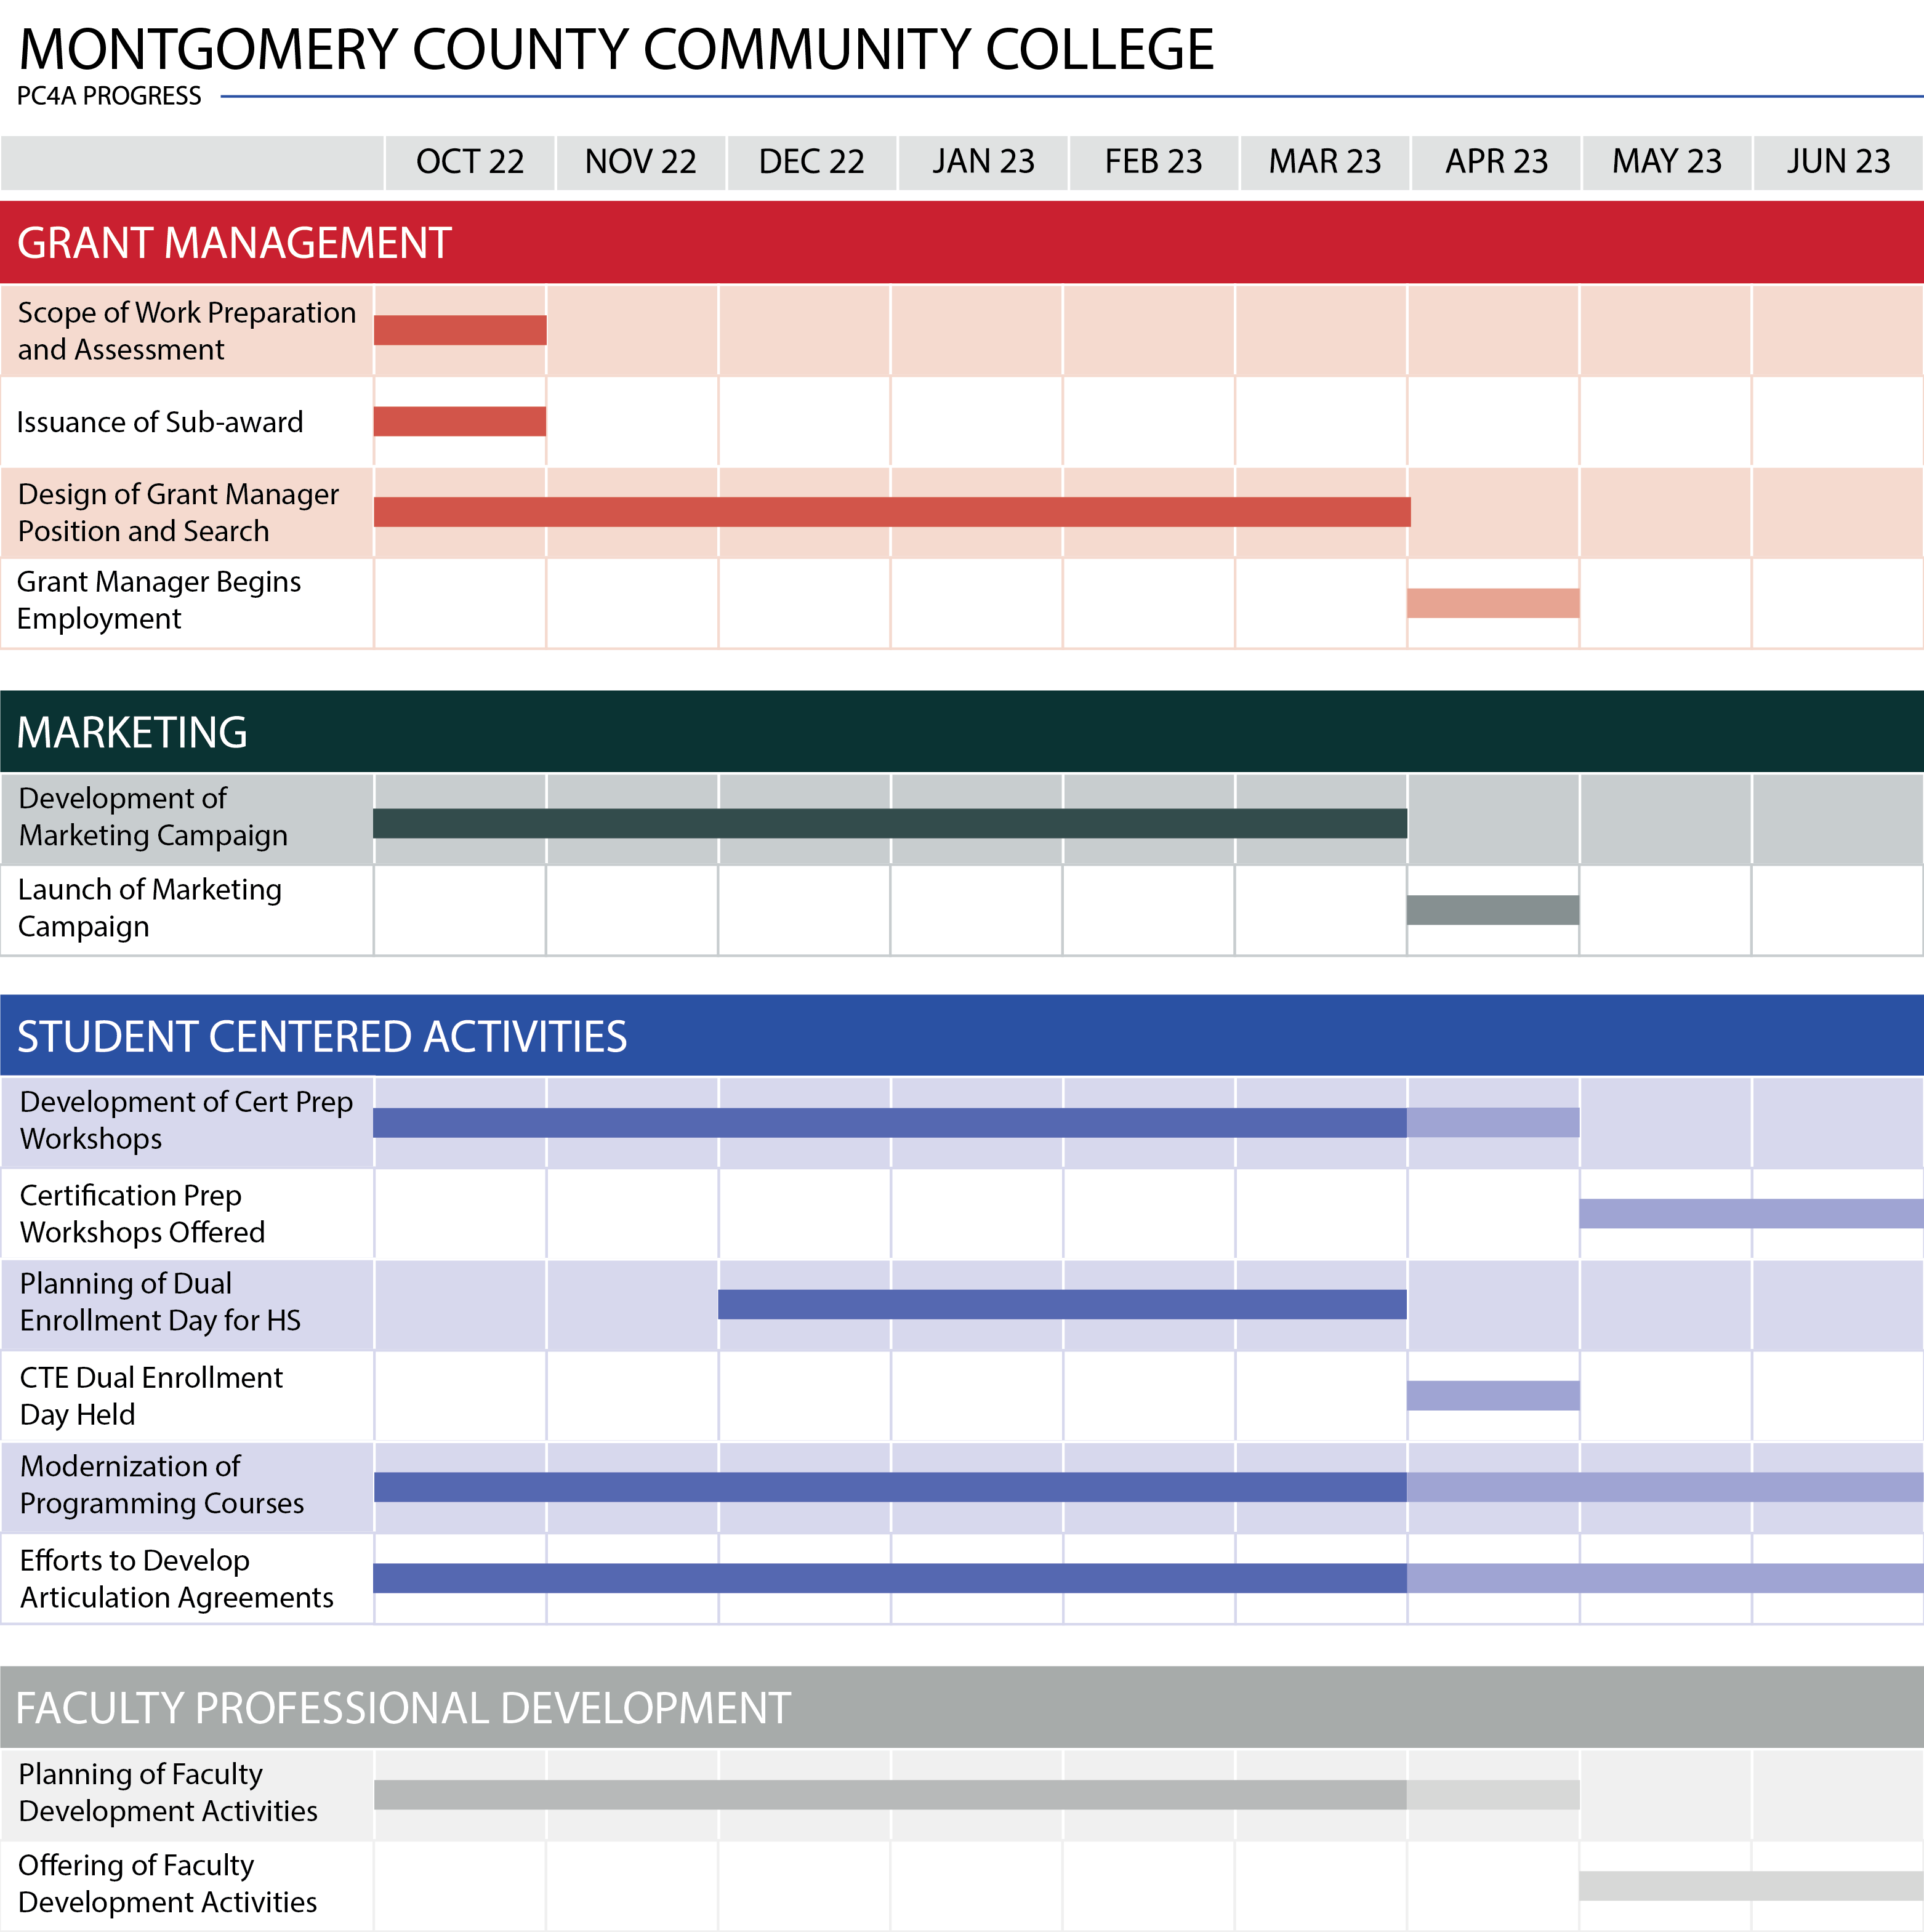 Chart showing MCCC PC4A progress